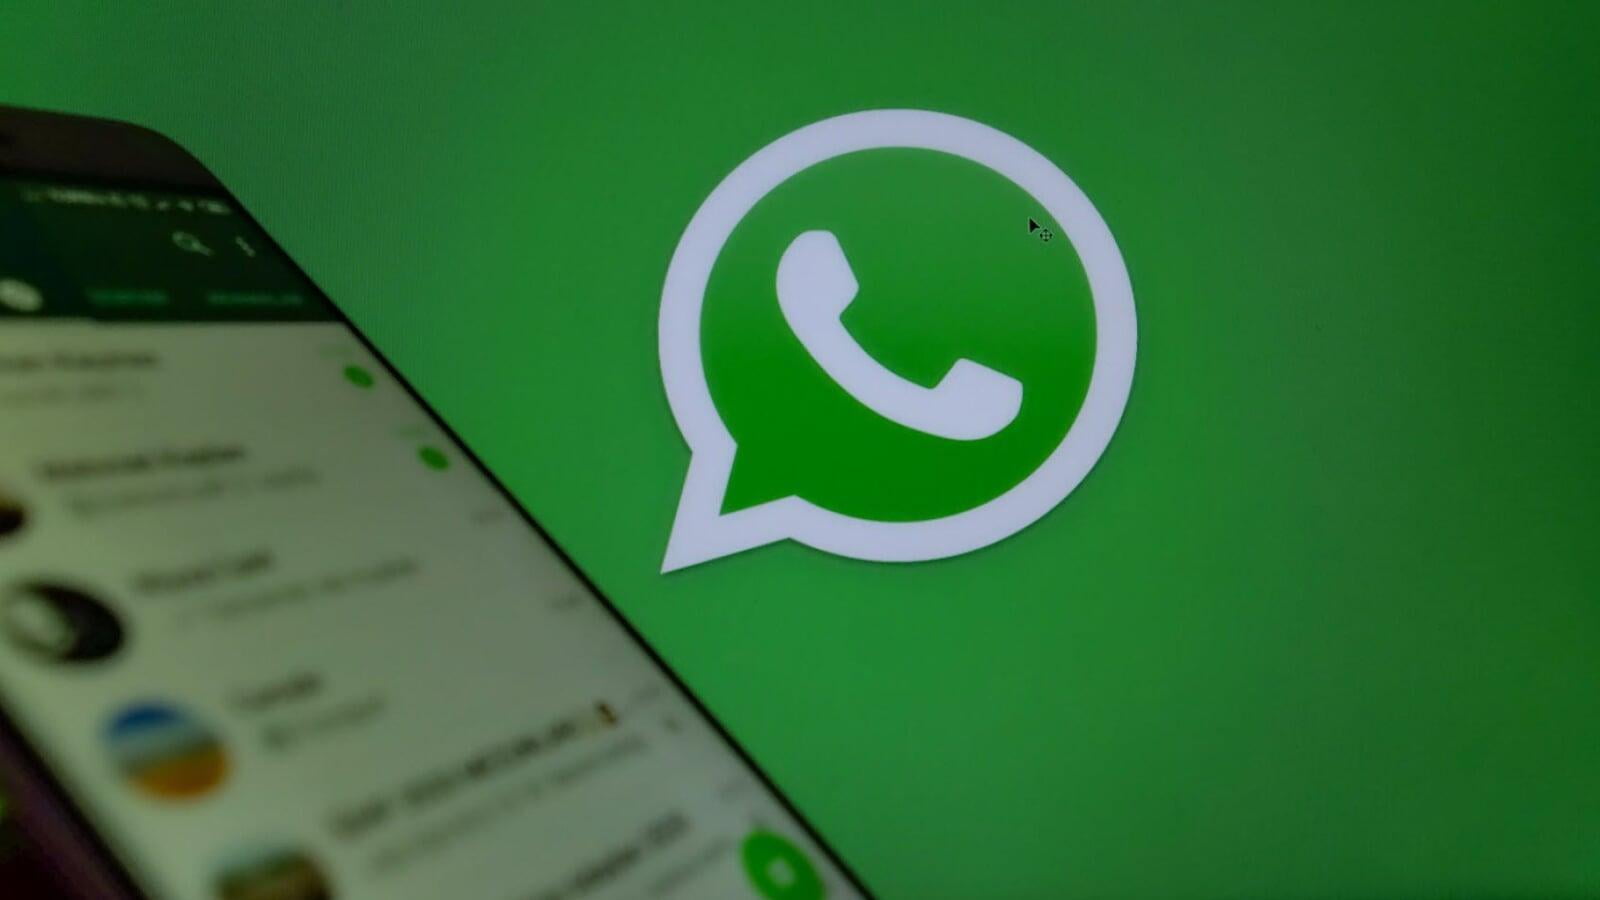 Ingresos Extras, estafas recurrentes por Whatsapp